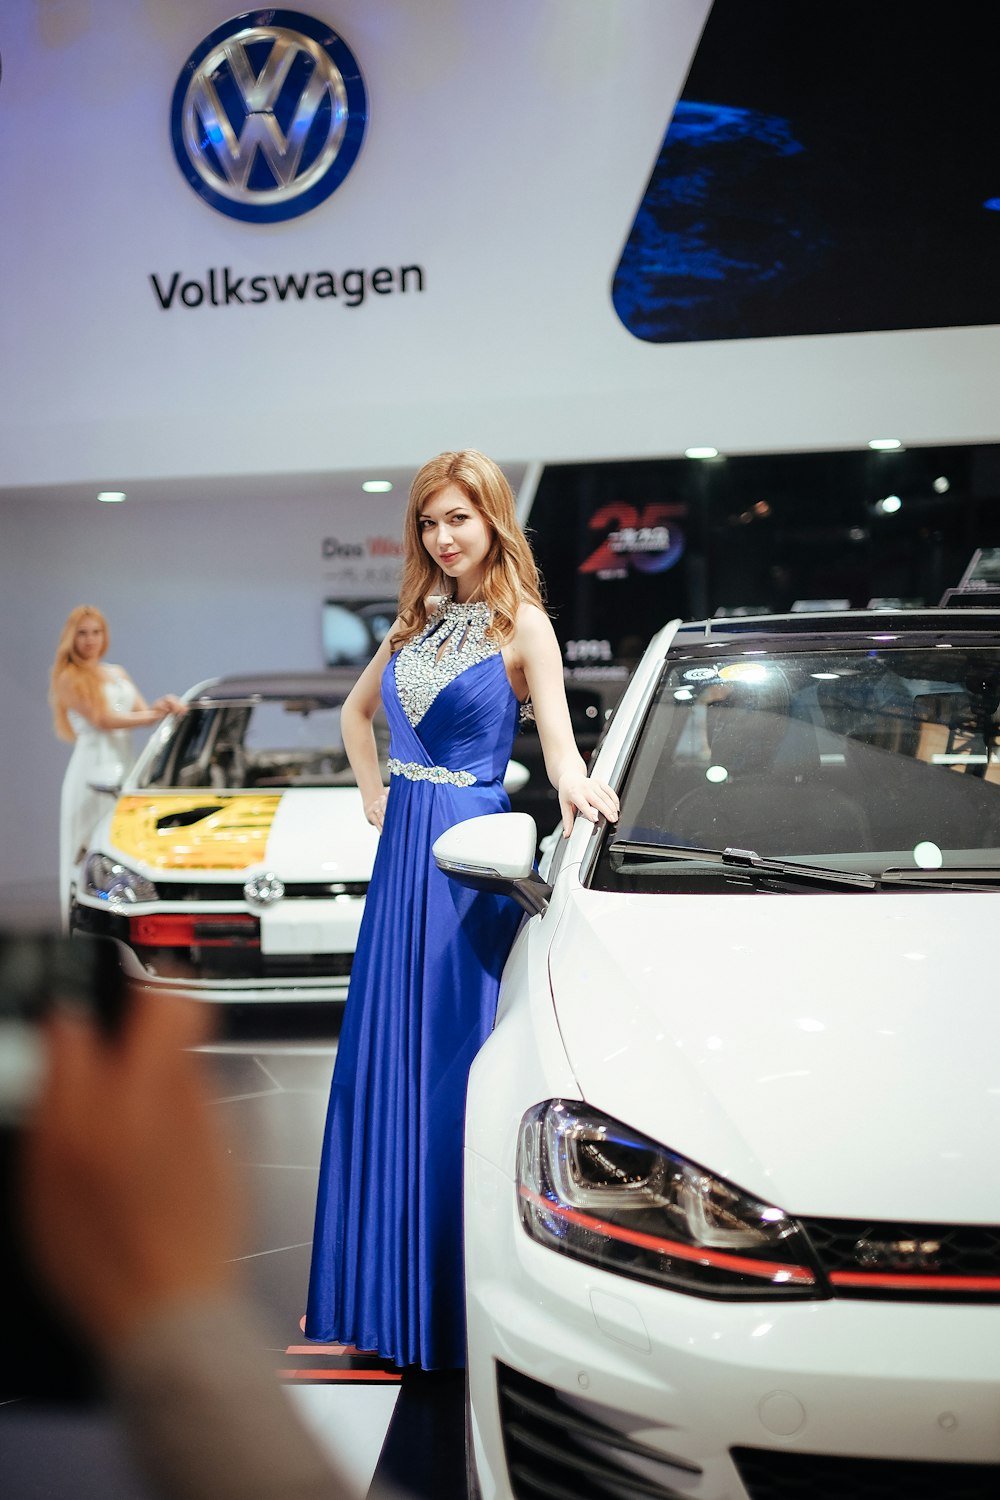 woman stands near Volkswagen car